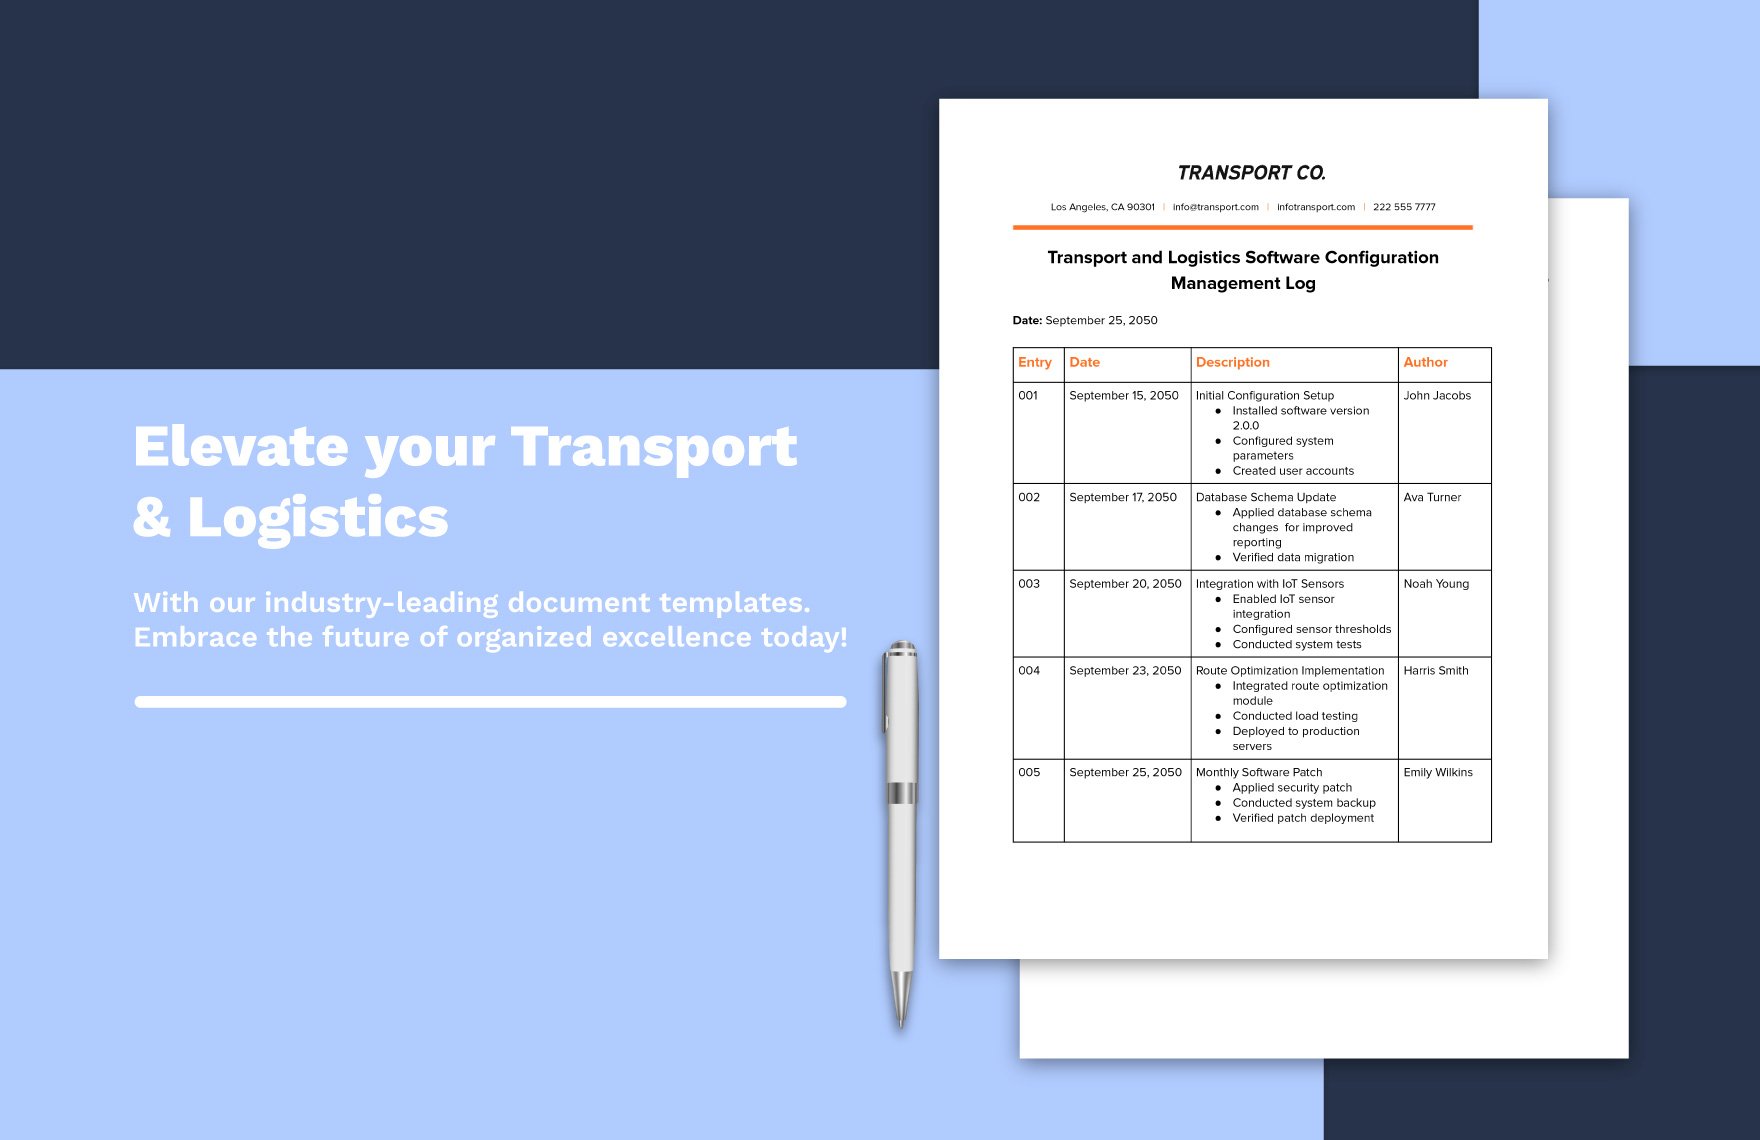 Transport and Logistics Software Configuration Management Log Template